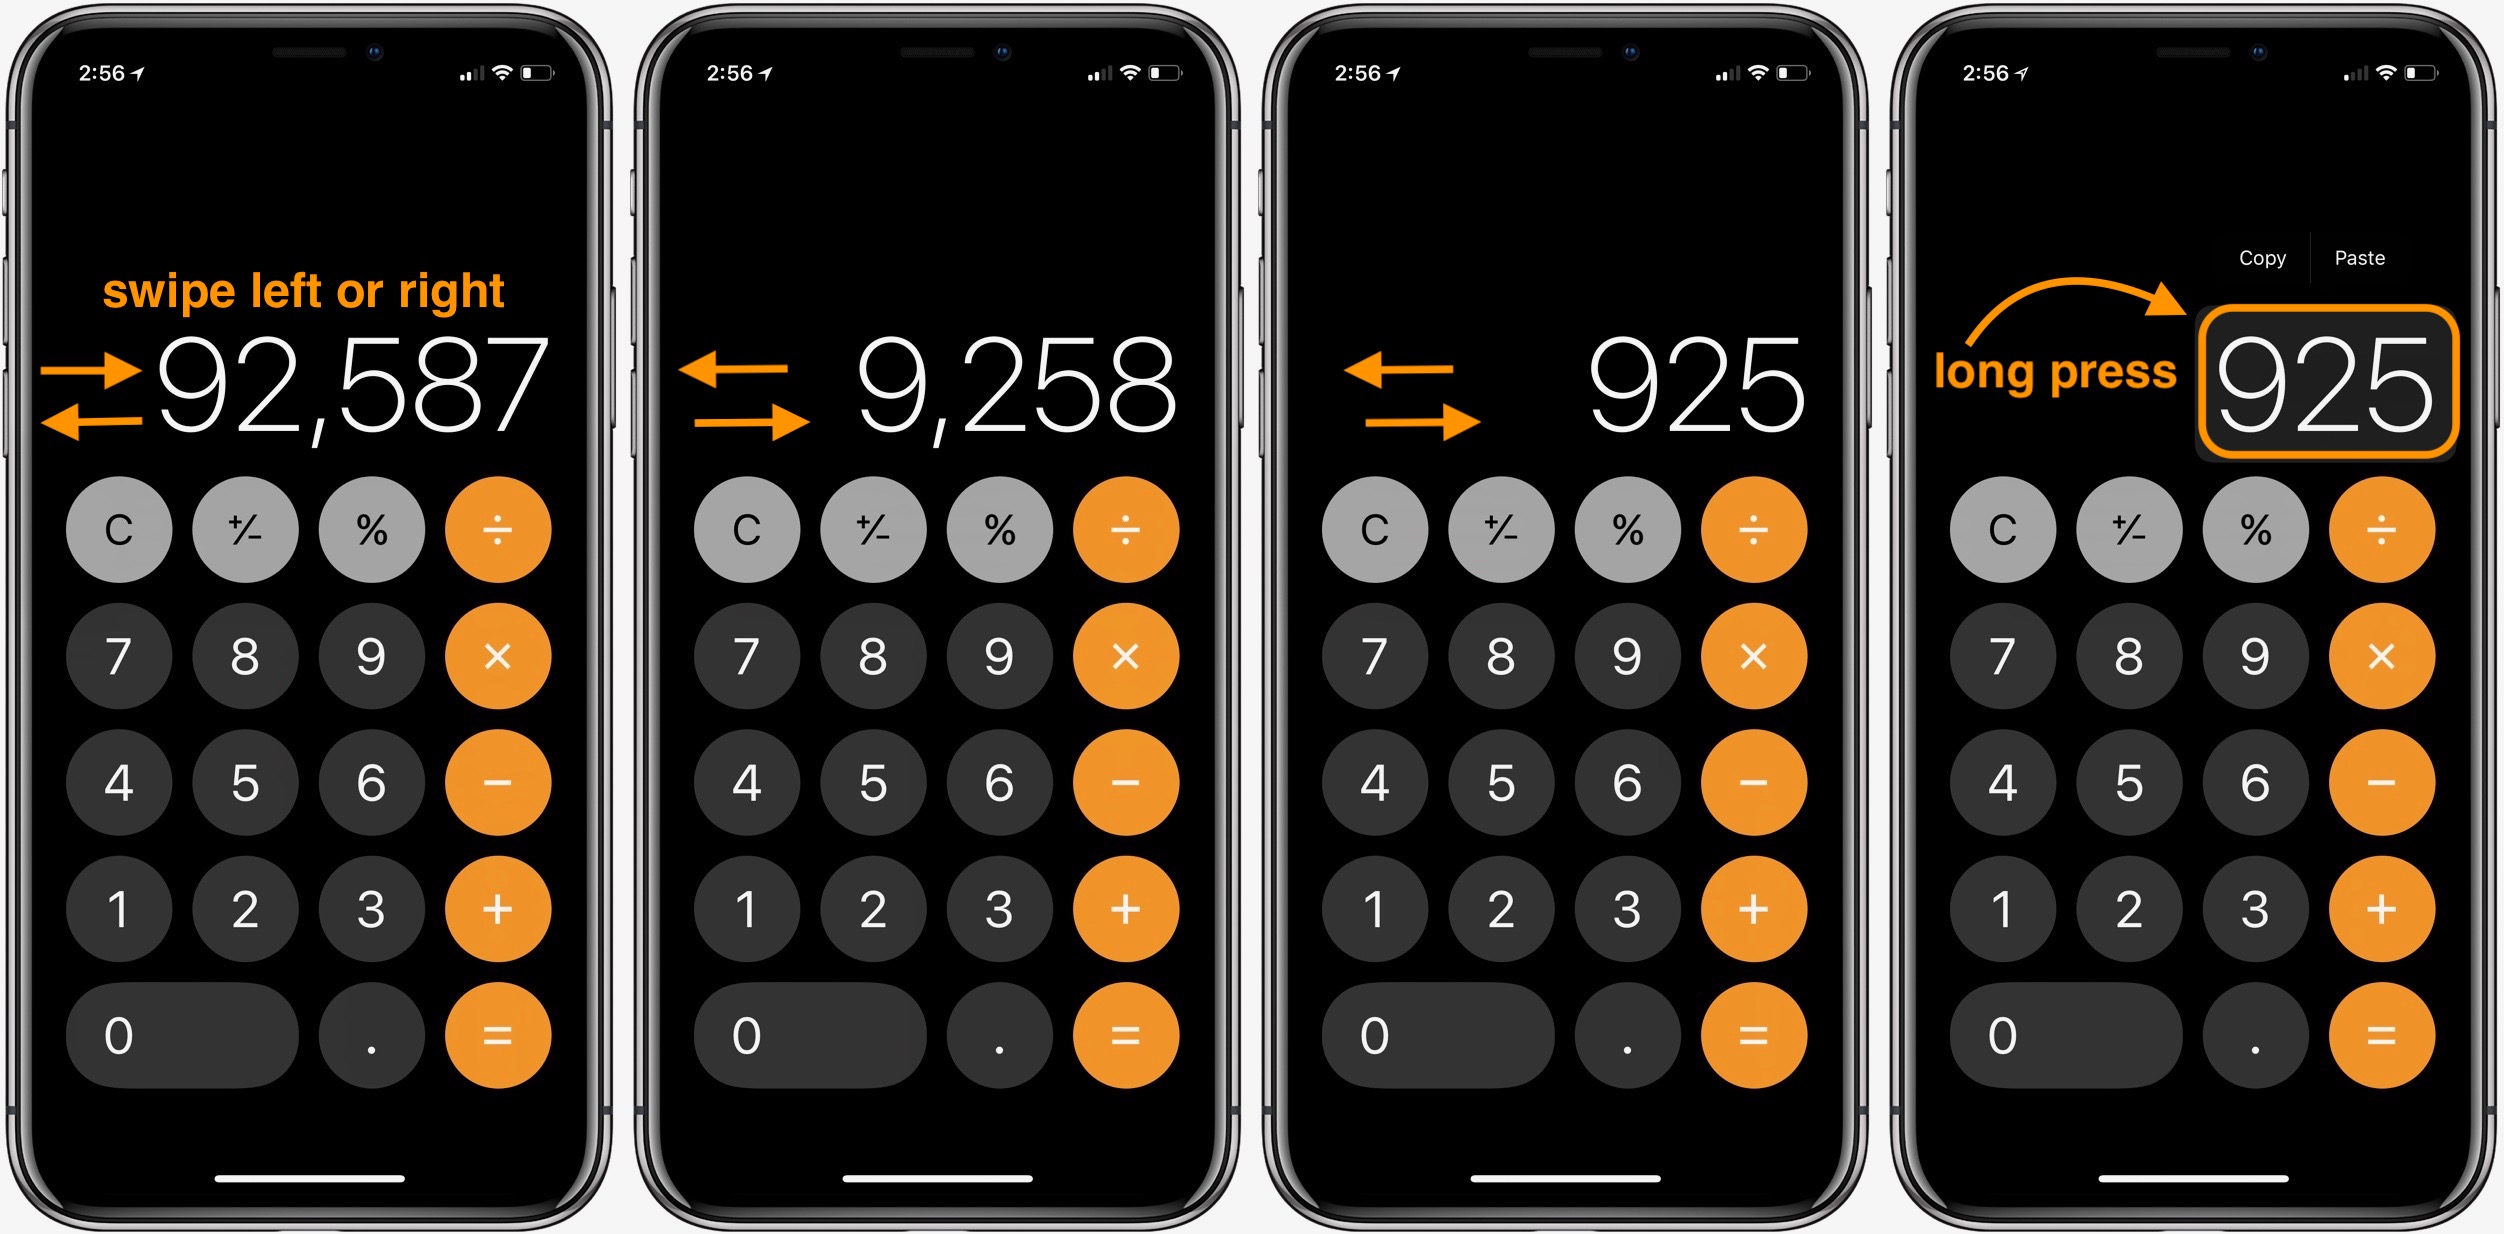 App secret iphone calculator for 